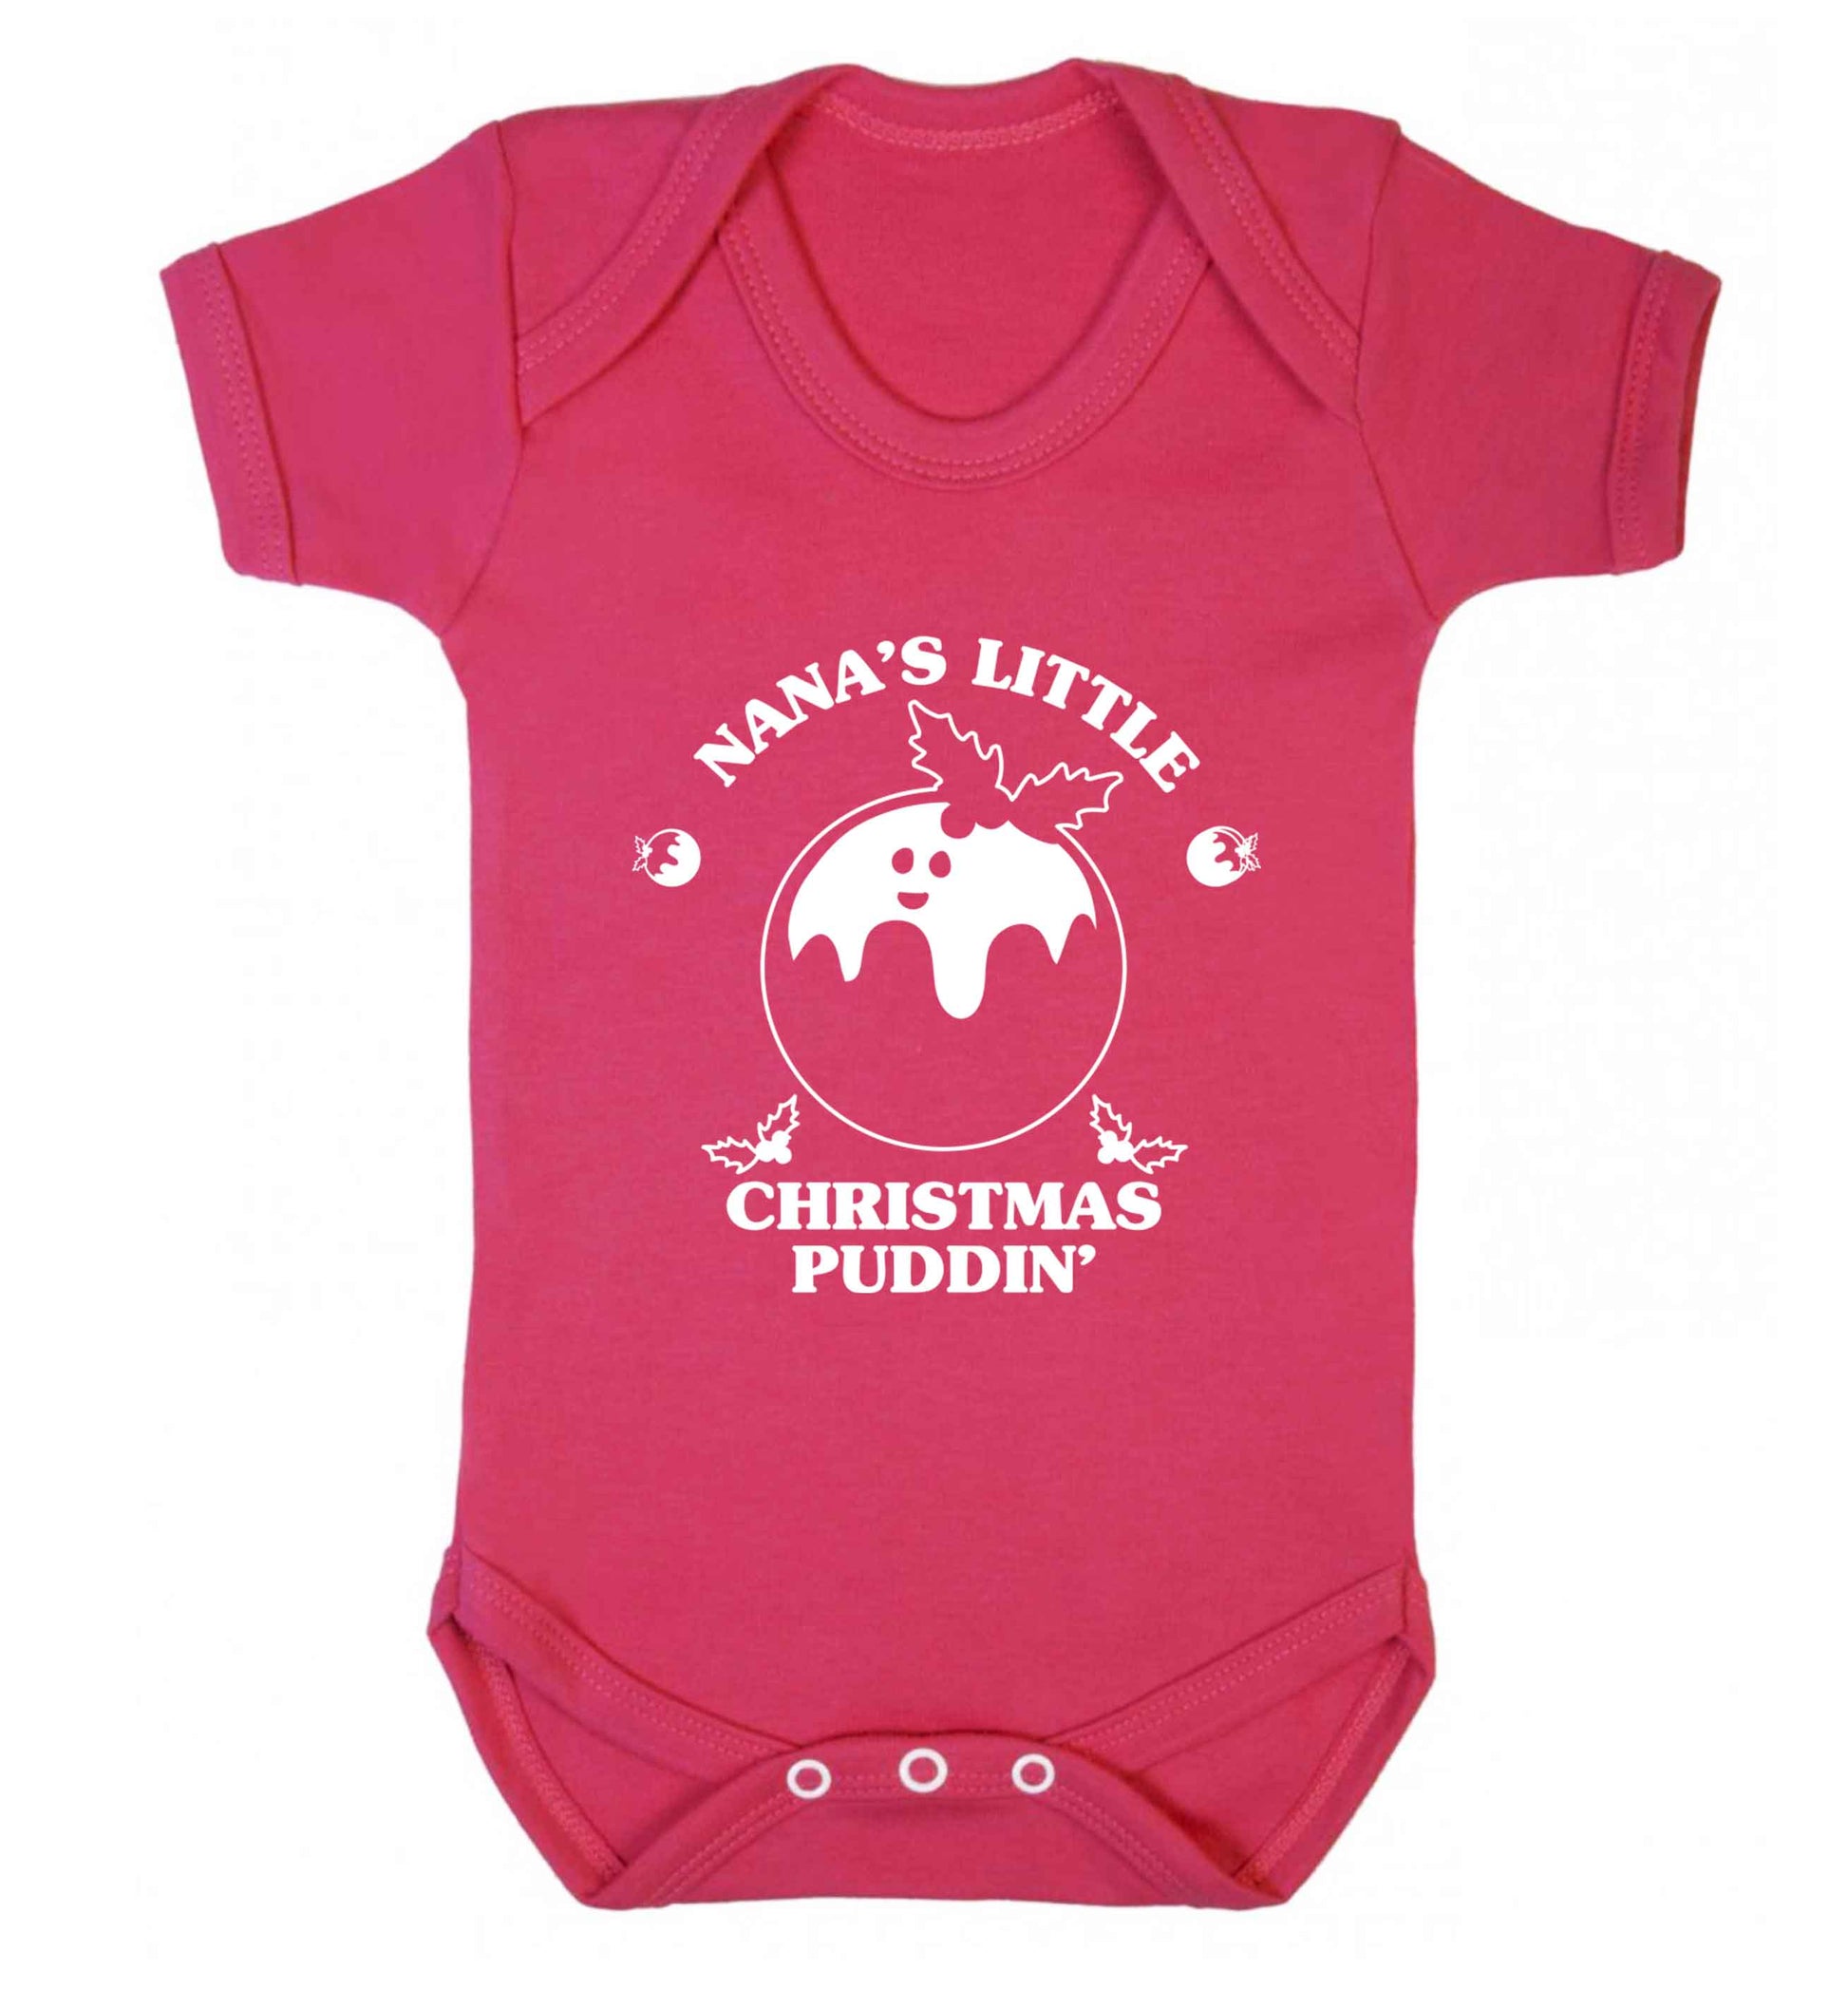 Nana's little Christmas puddin' Baby Vest dark pink 18-24 months